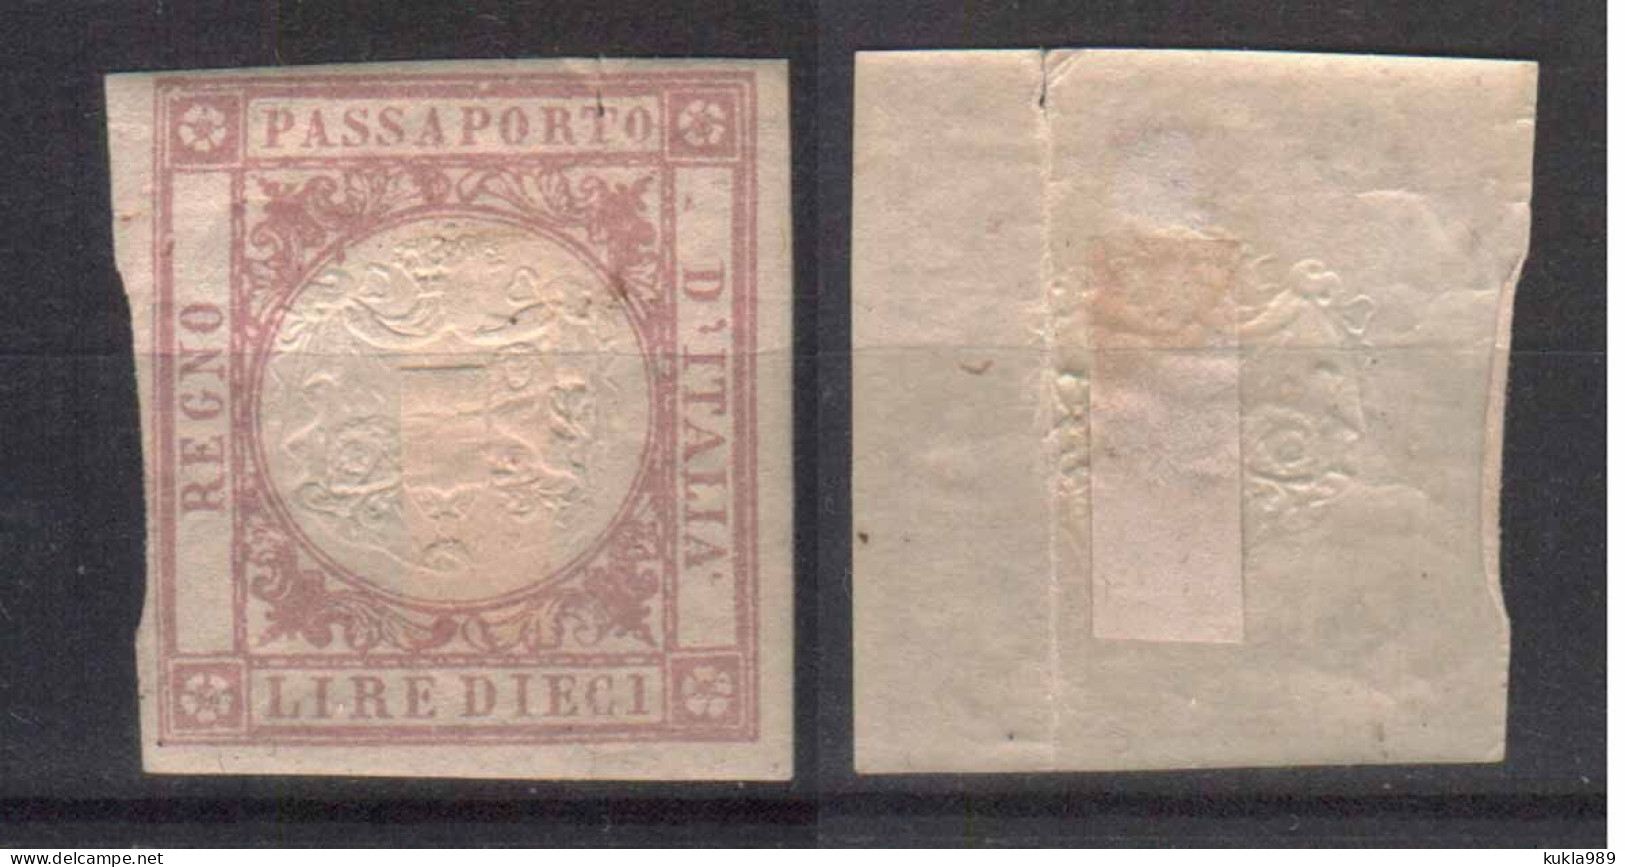 KINGDOM ITALY   FISCAL REVENUE TAX PASSPORT  STAMP  C. 1860s, MH - Fiscali